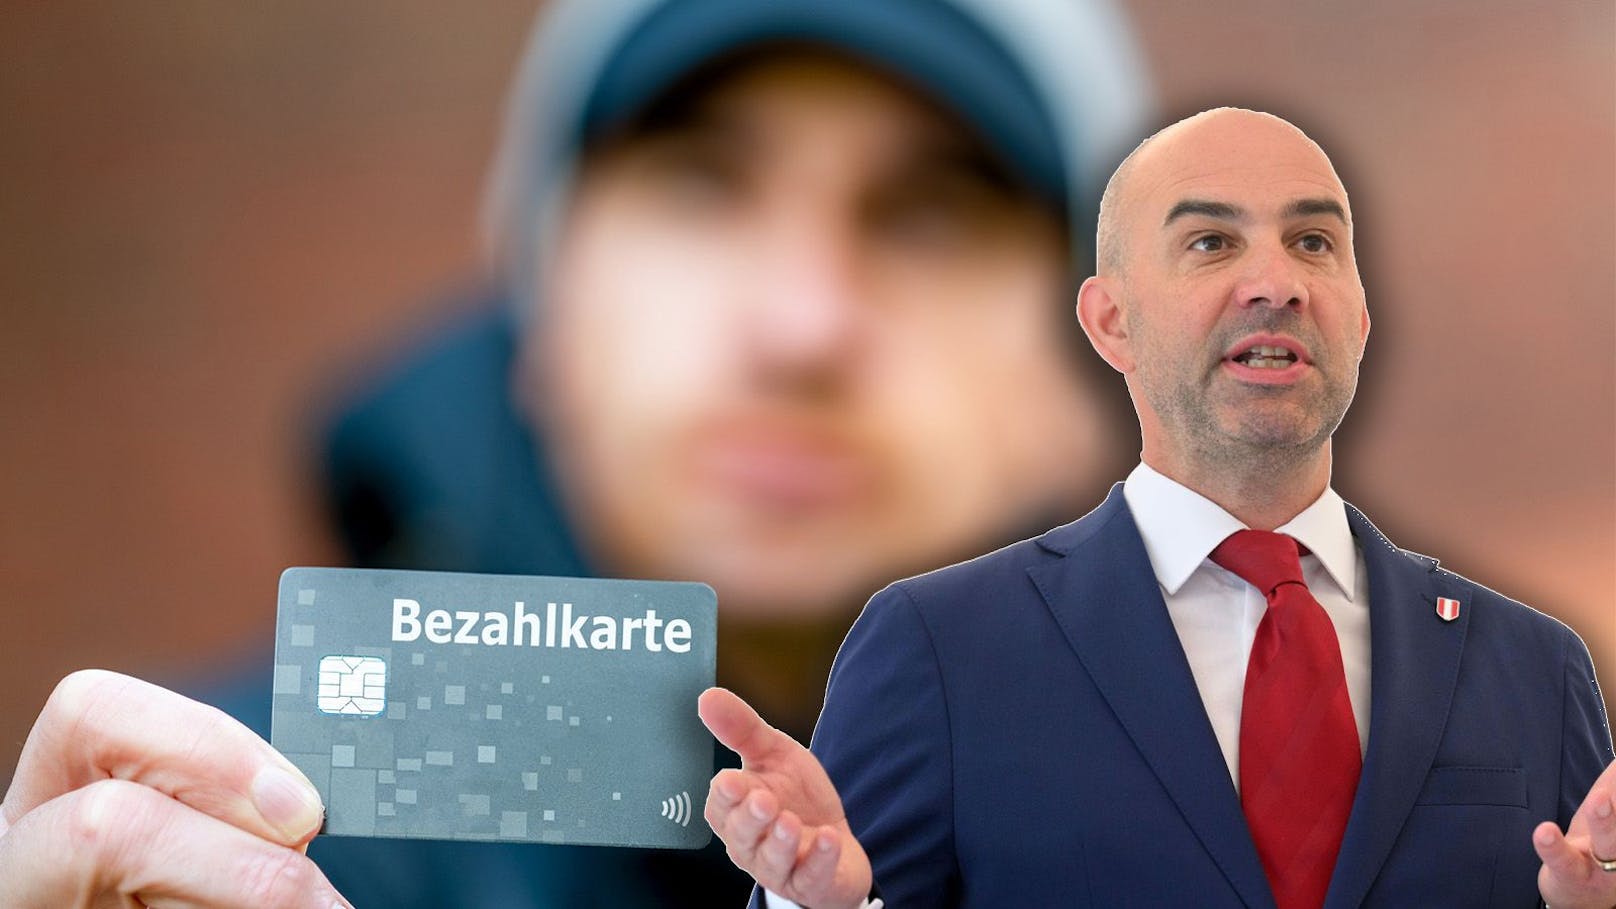 "Schikane" – heftige Kritik an FPÖ-Asyl-Landesrat